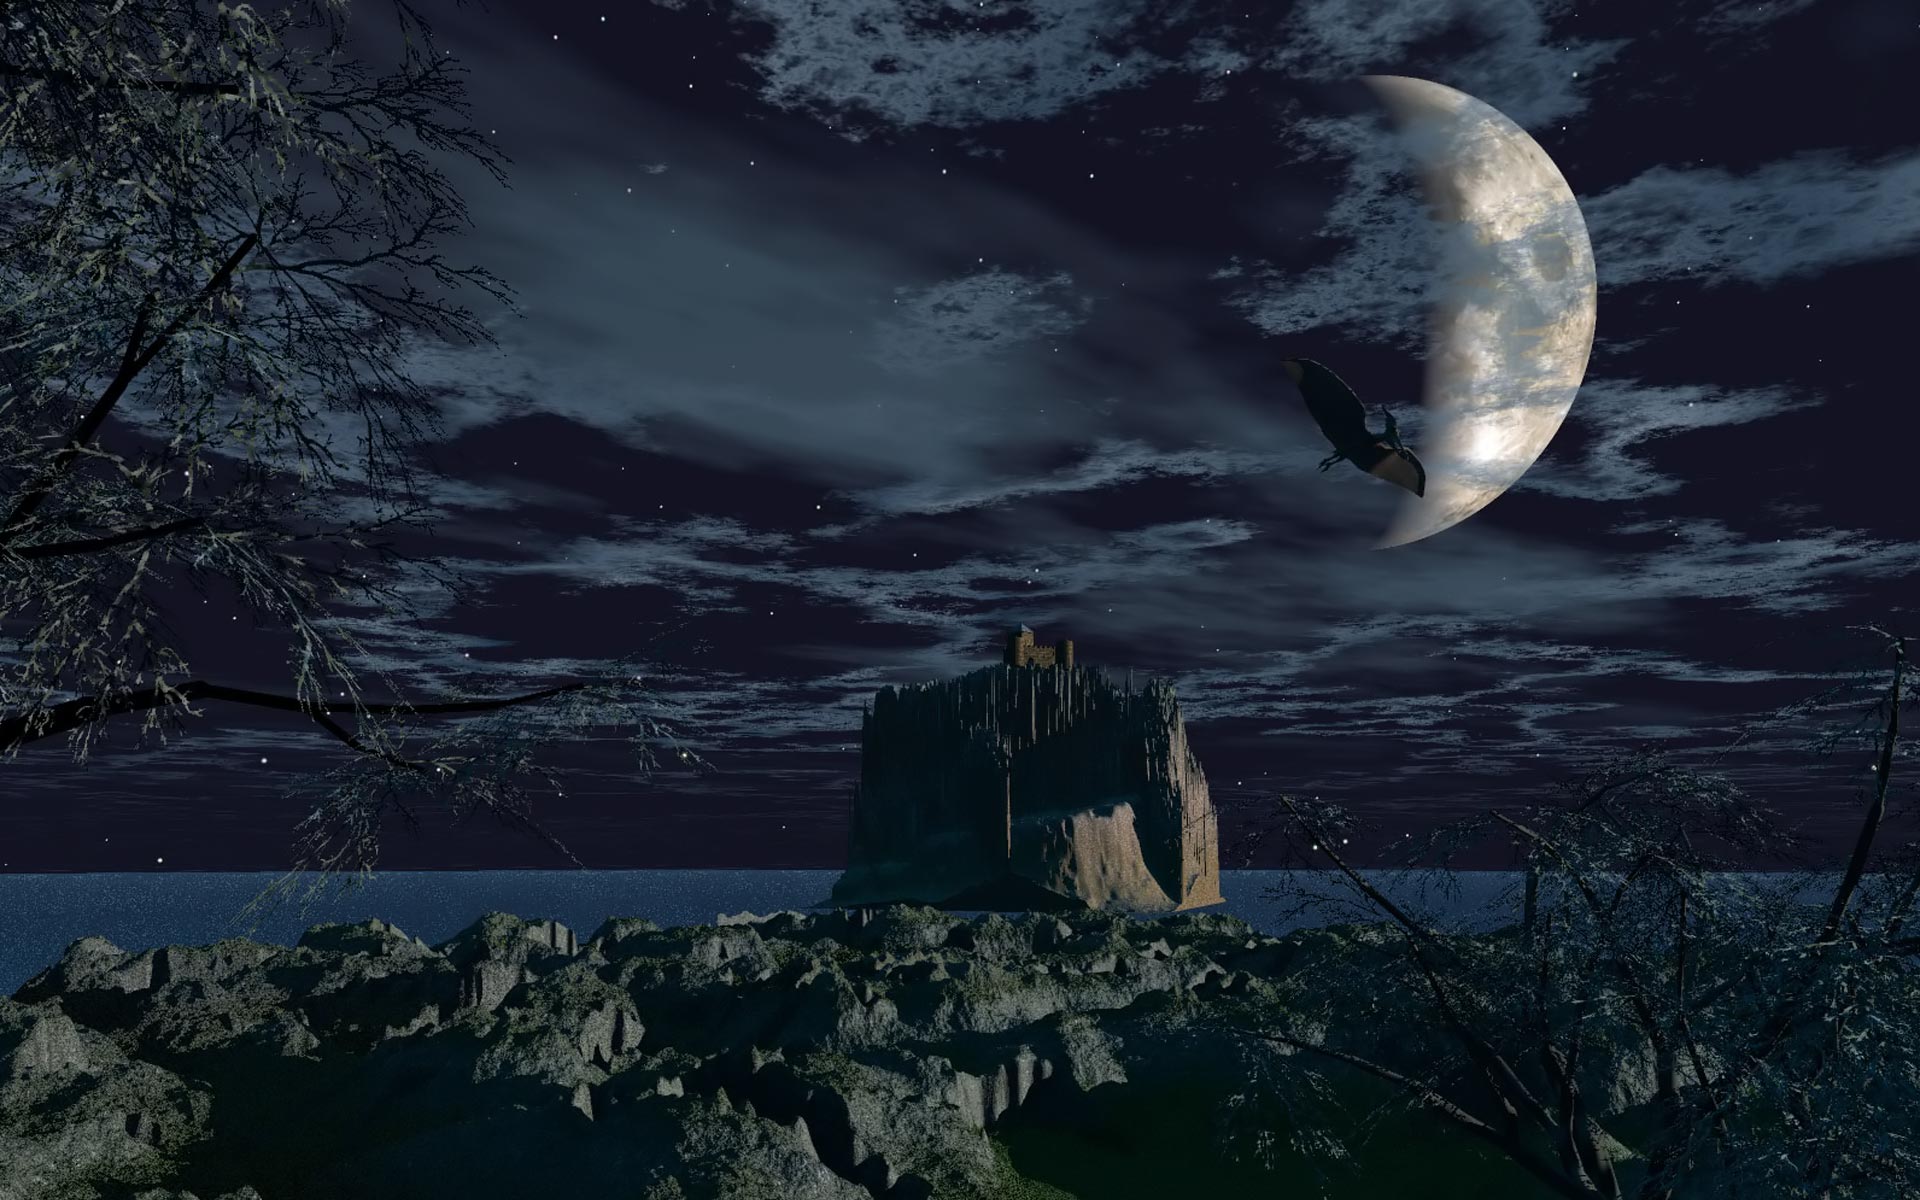 Enchanting castle amidst a surreal fantasy landscape.